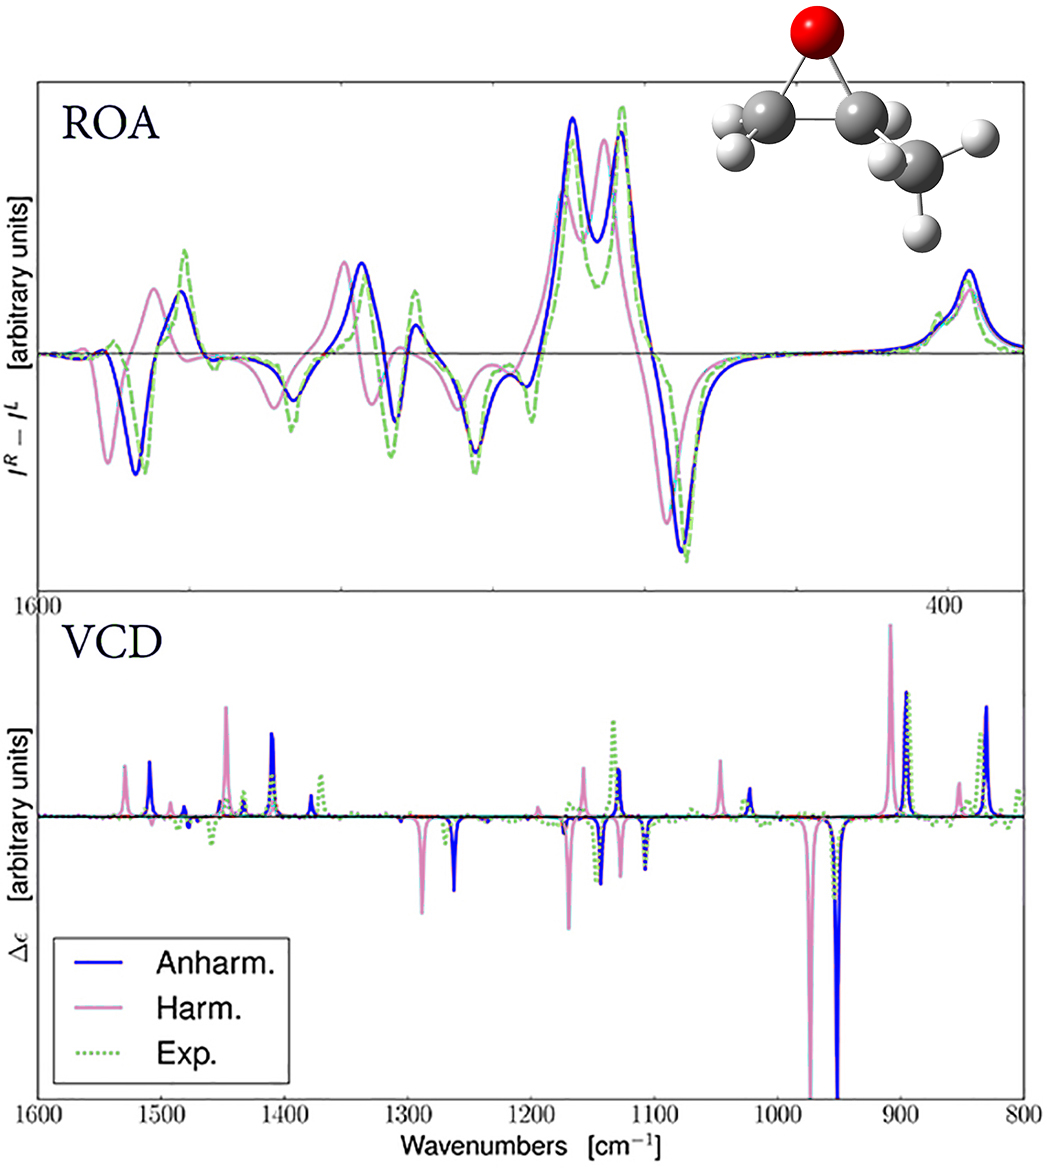 methyloxirane_VCD and ROA